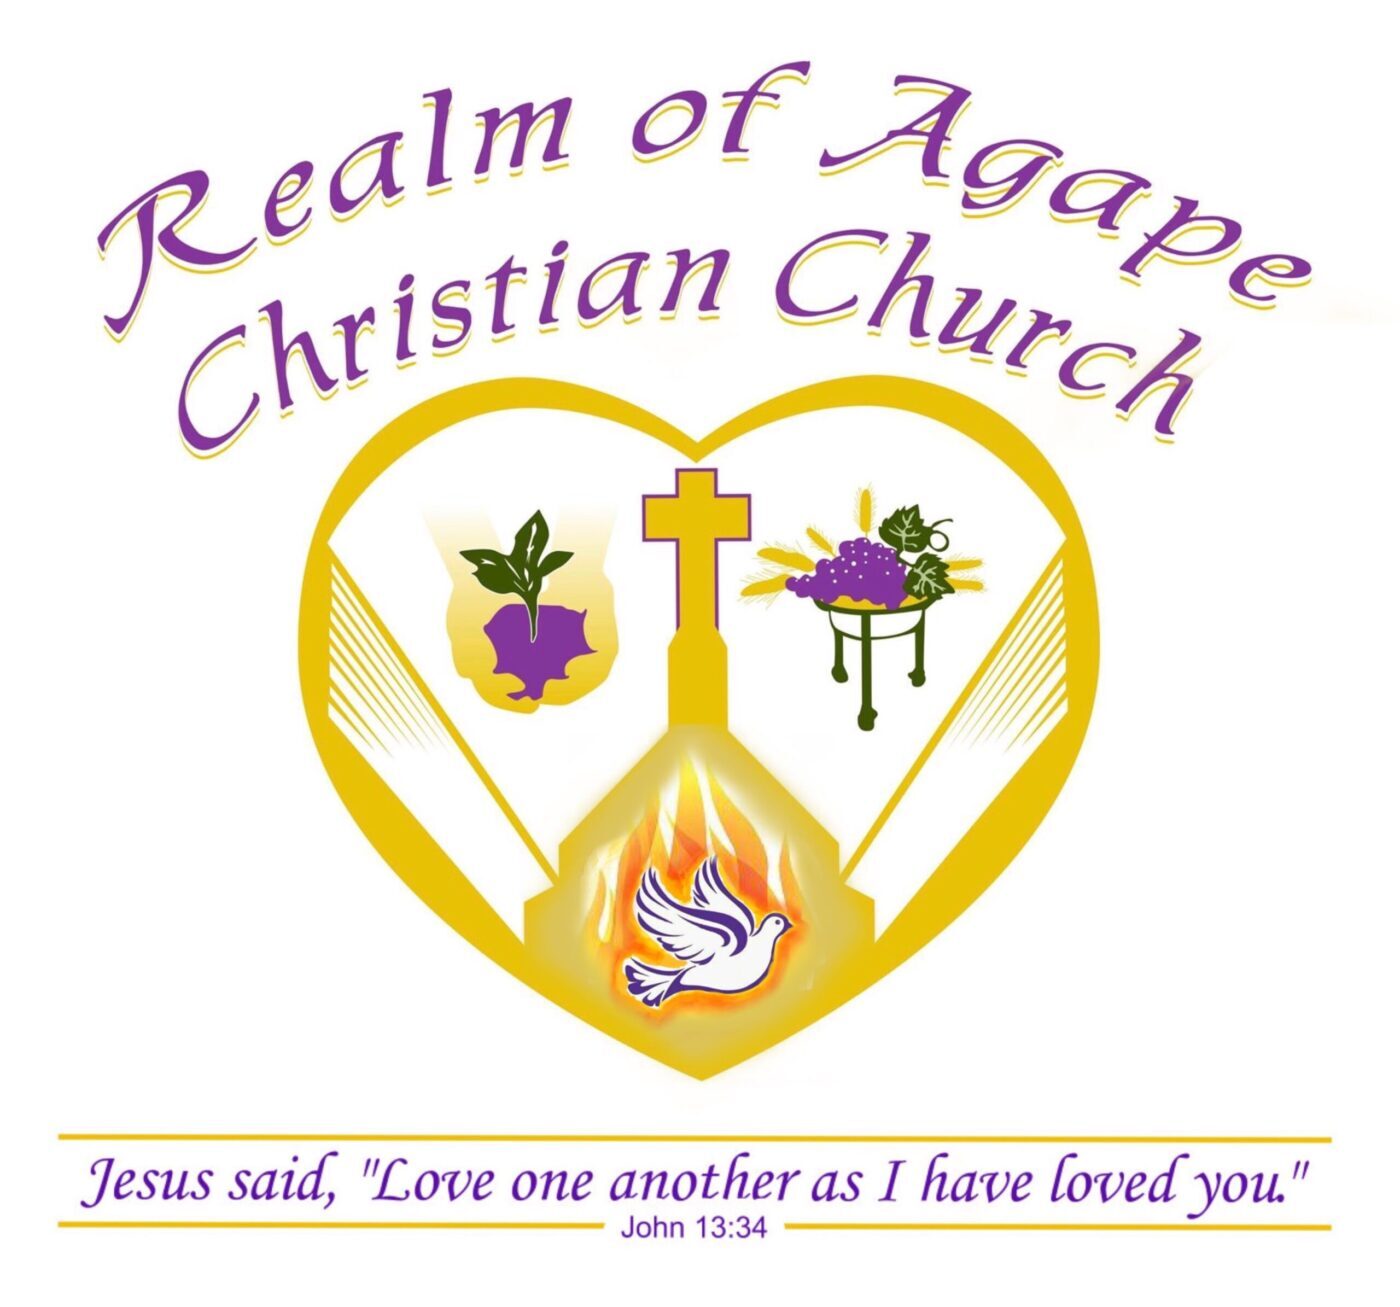 Realm of Agape Christian Church